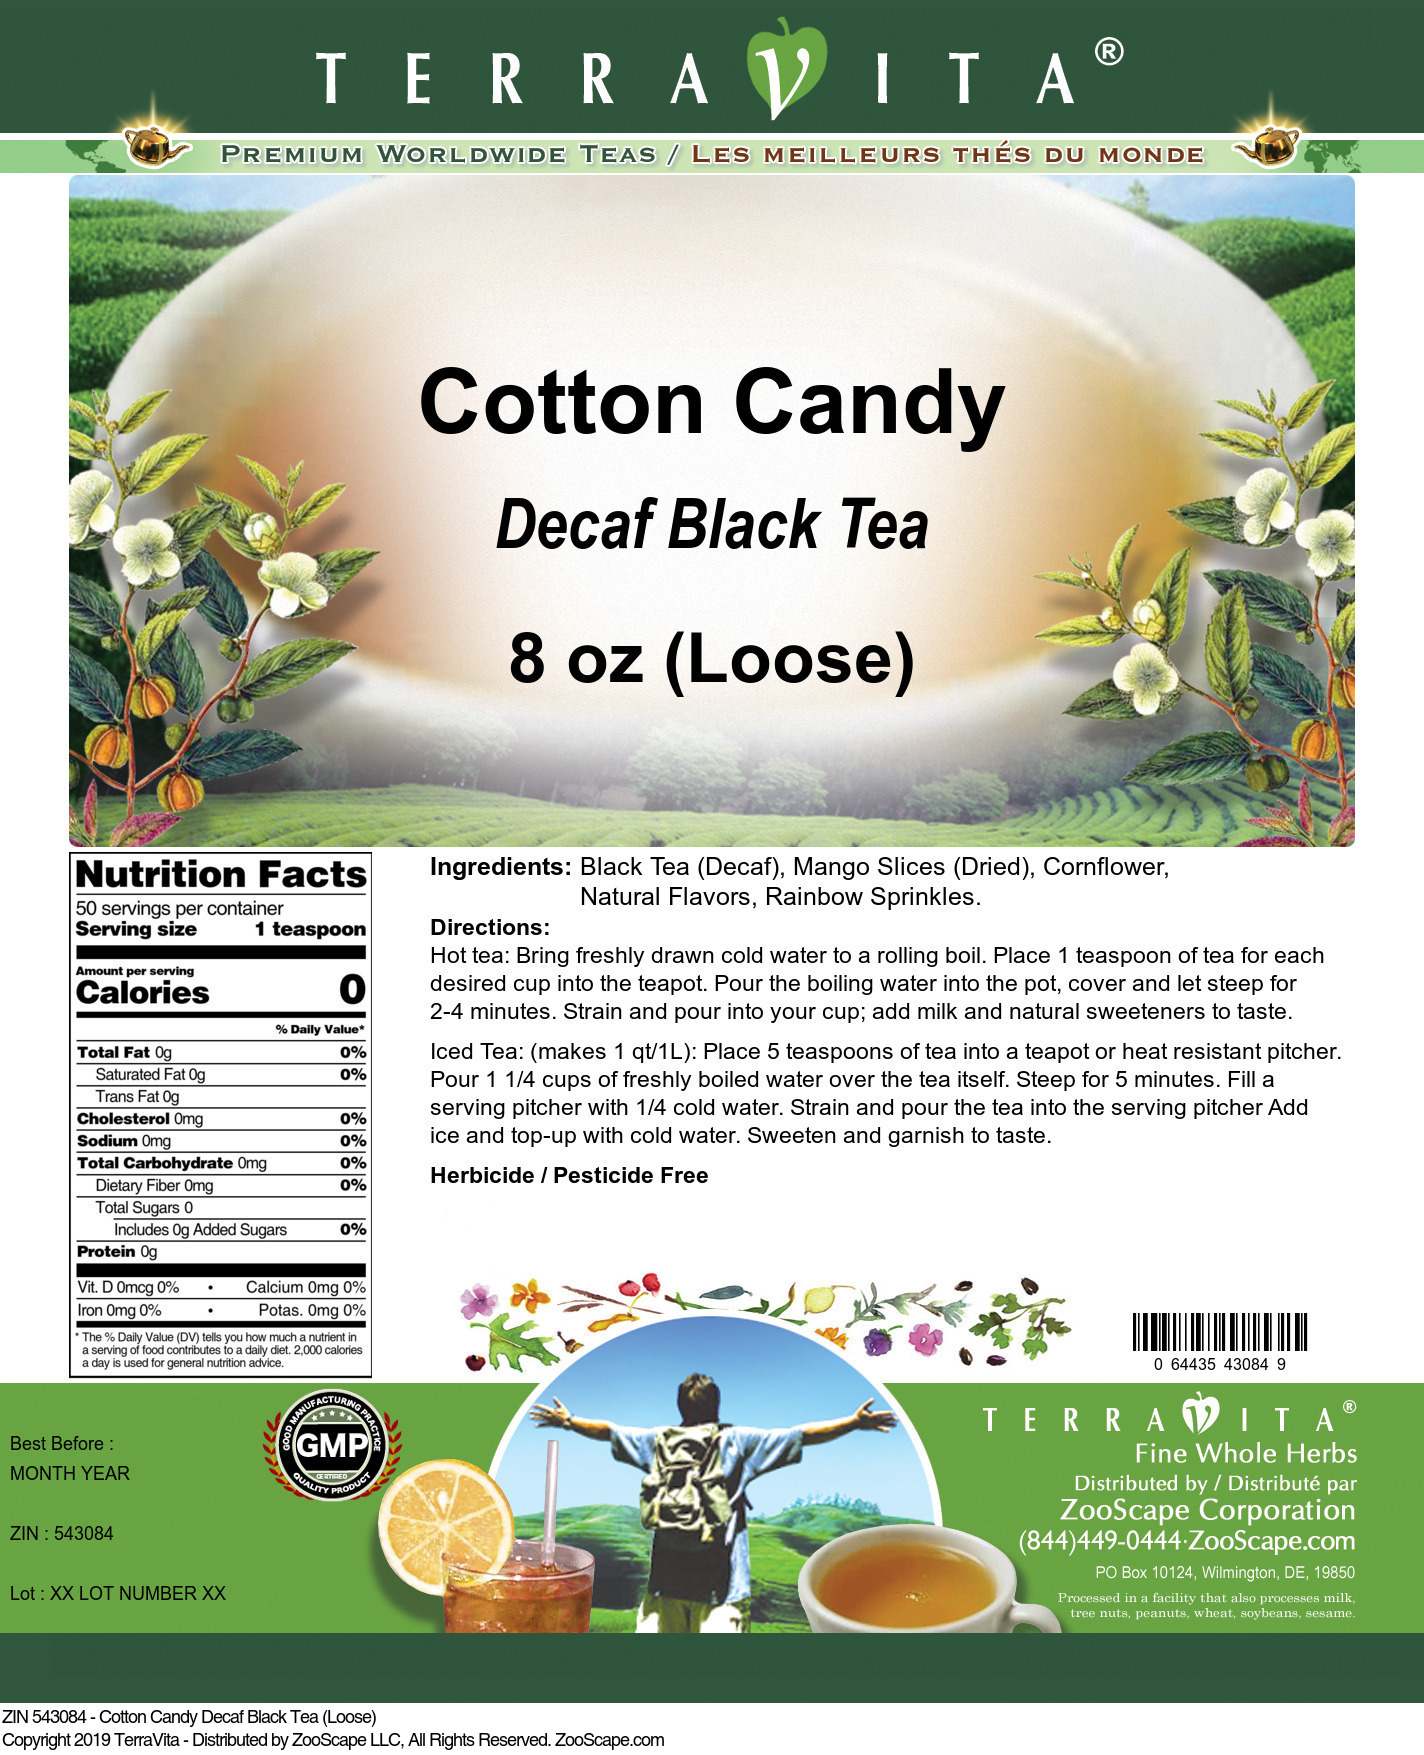 Cotton Candy Decaf Black Tea (Loose) - Label